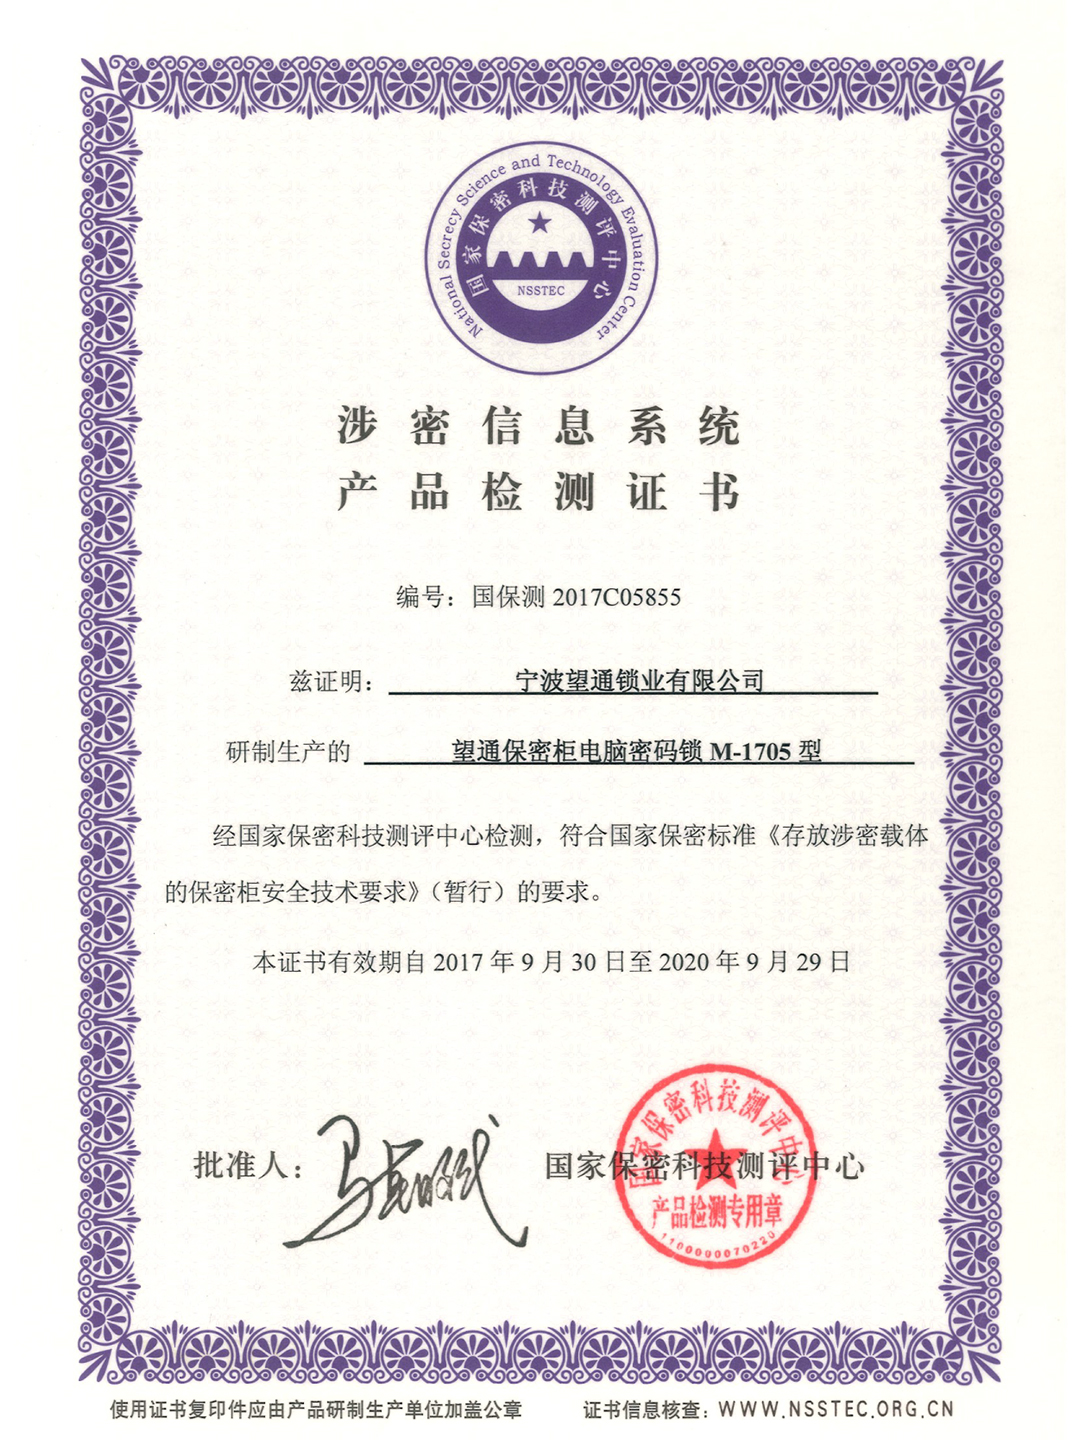 M-1705 Security Test Certificate